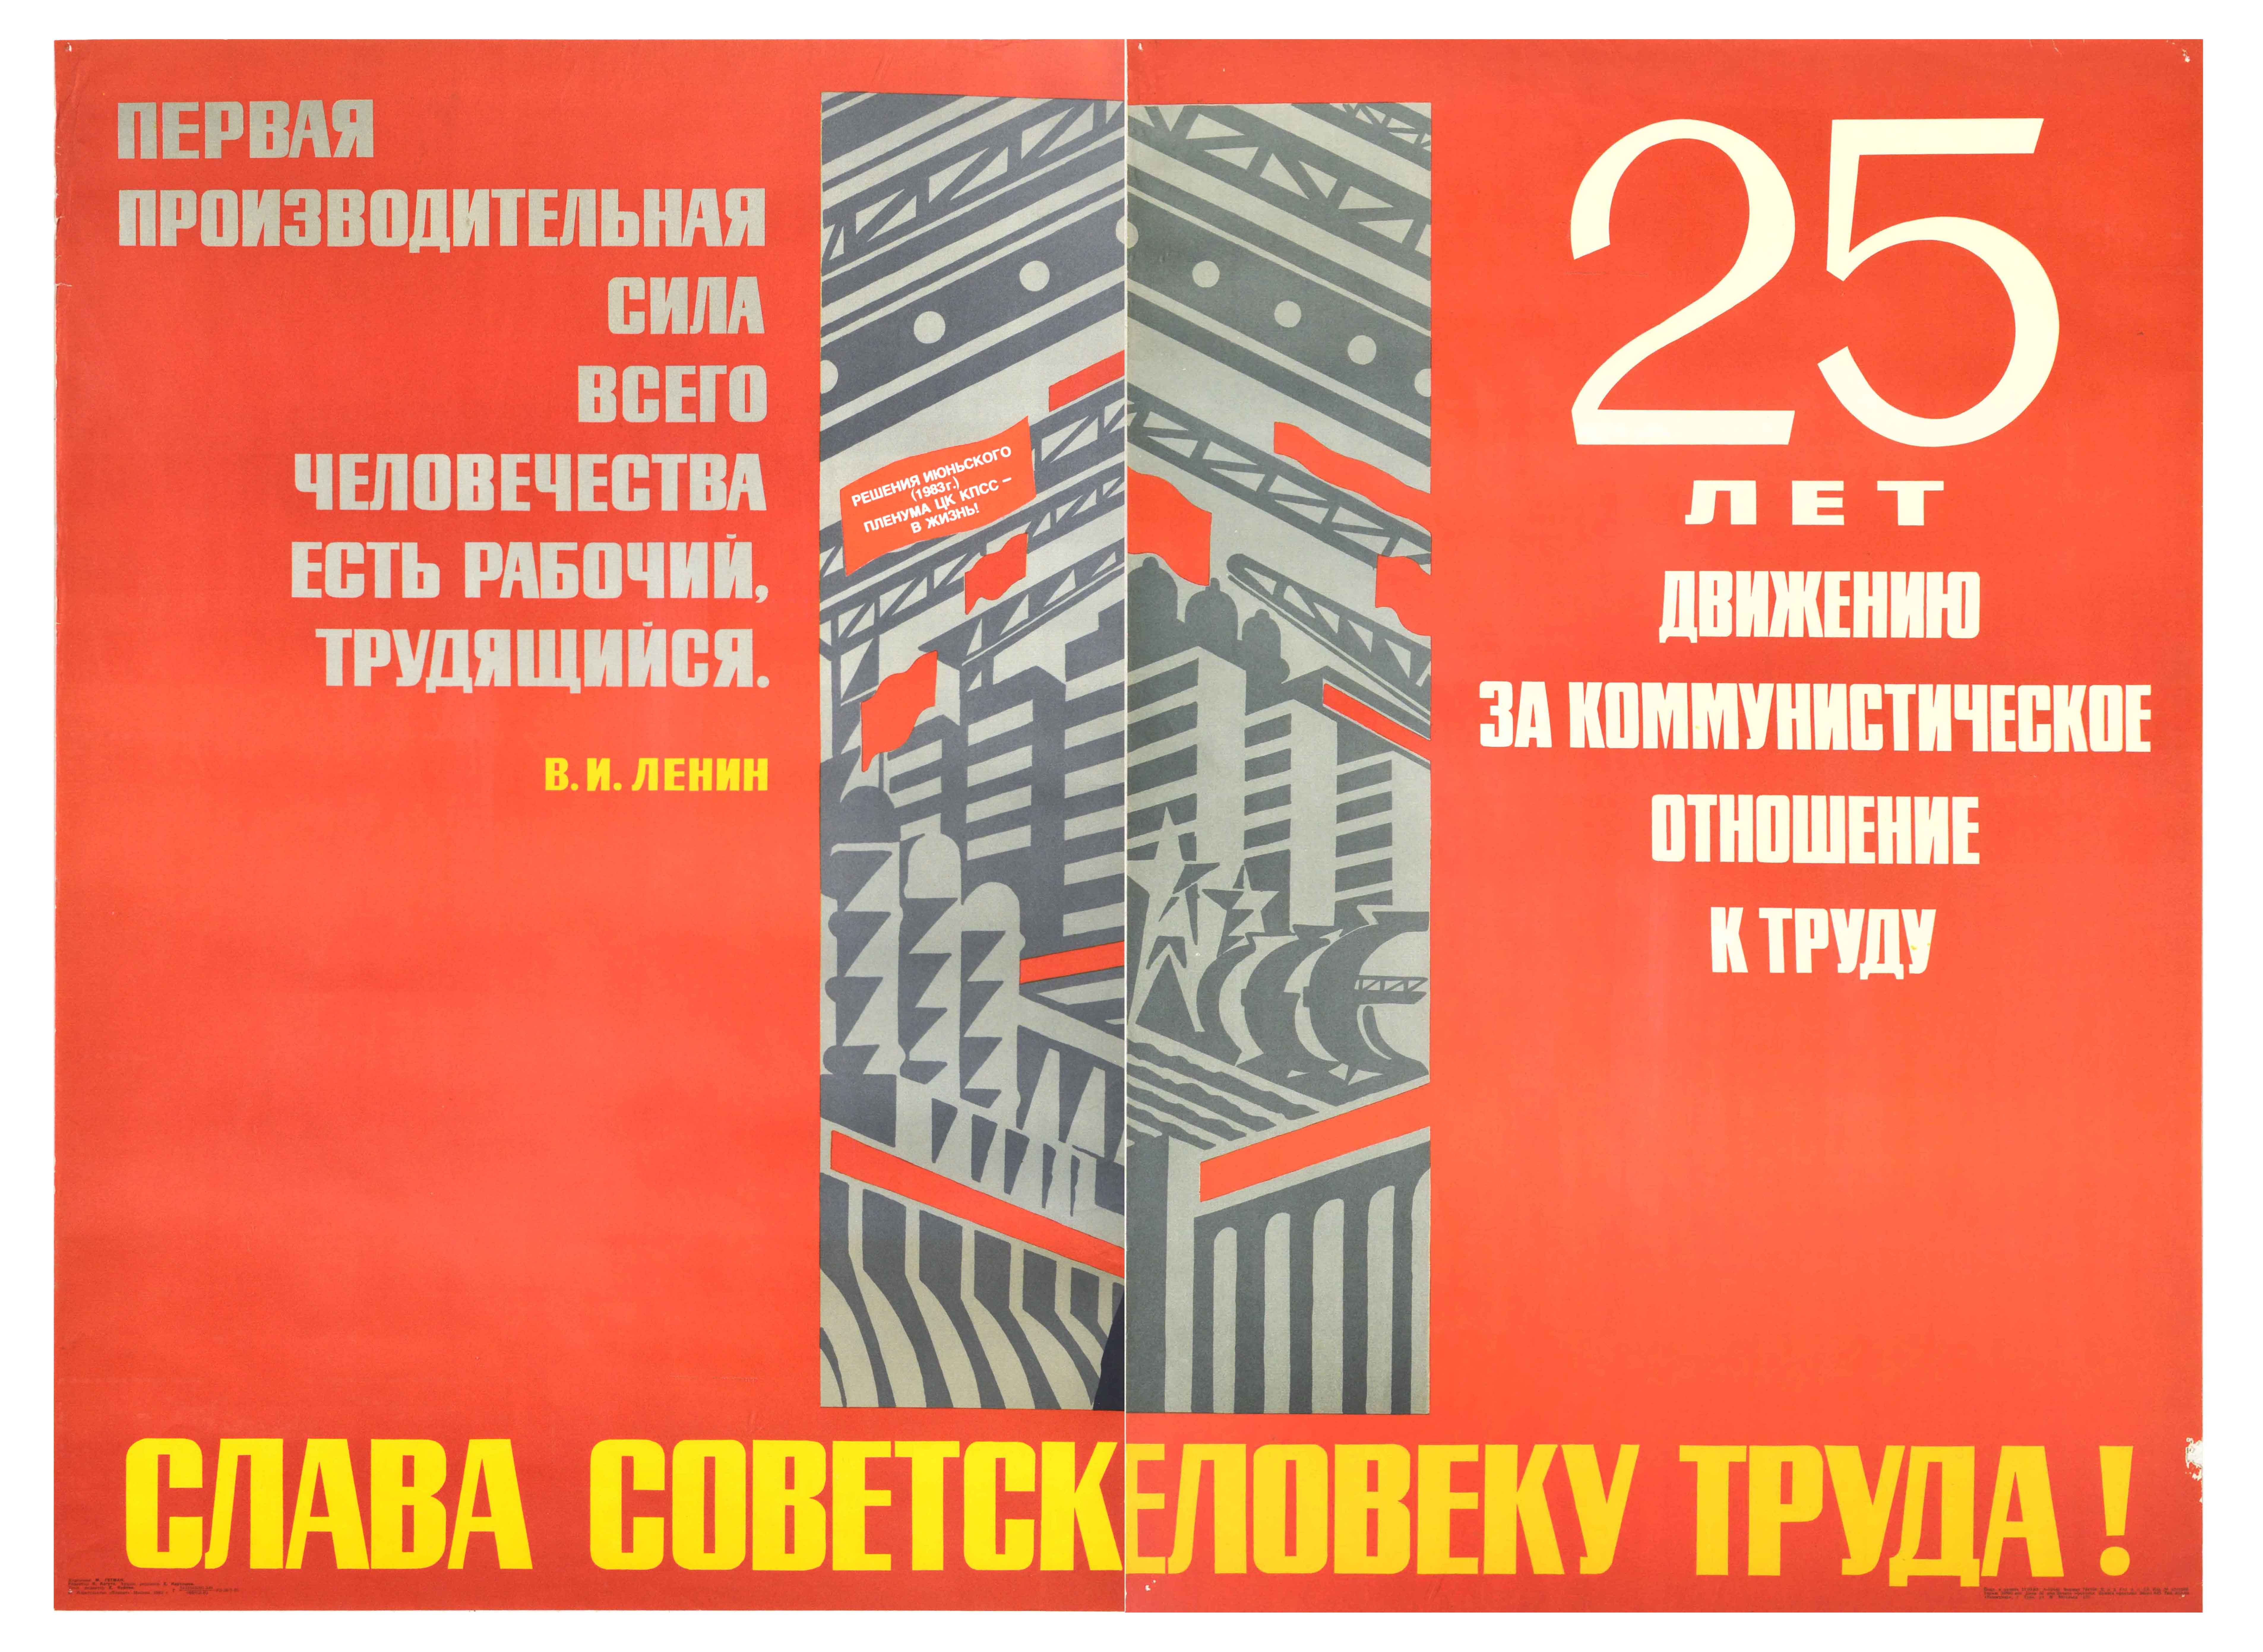 Propaganda Poster Communist Work Attitude Worker The Productive Force USSR Lenin